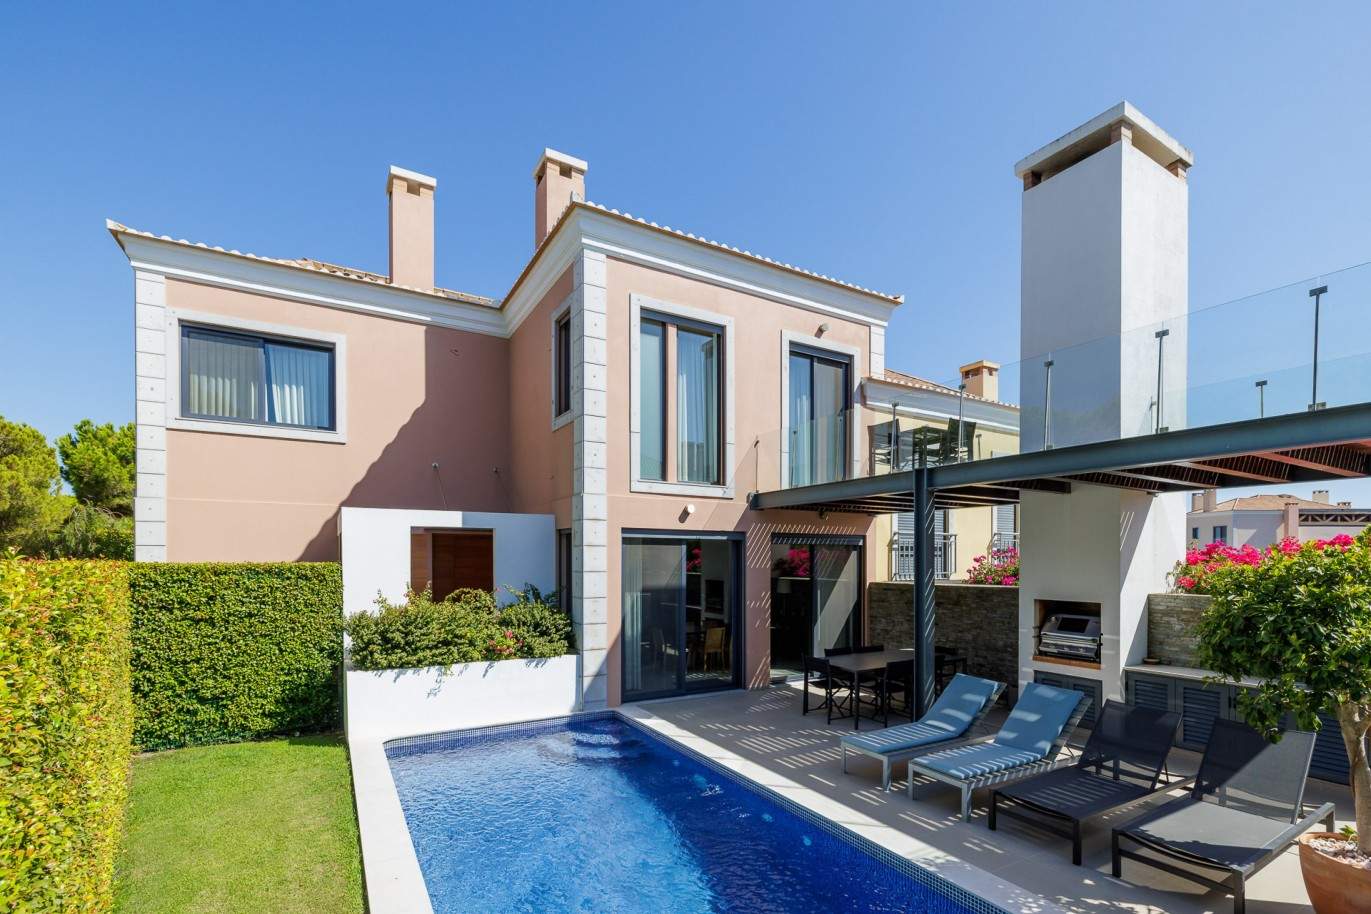 Moradia V2 com piscina, para venda em Vale do Lobo, Algarve_207343